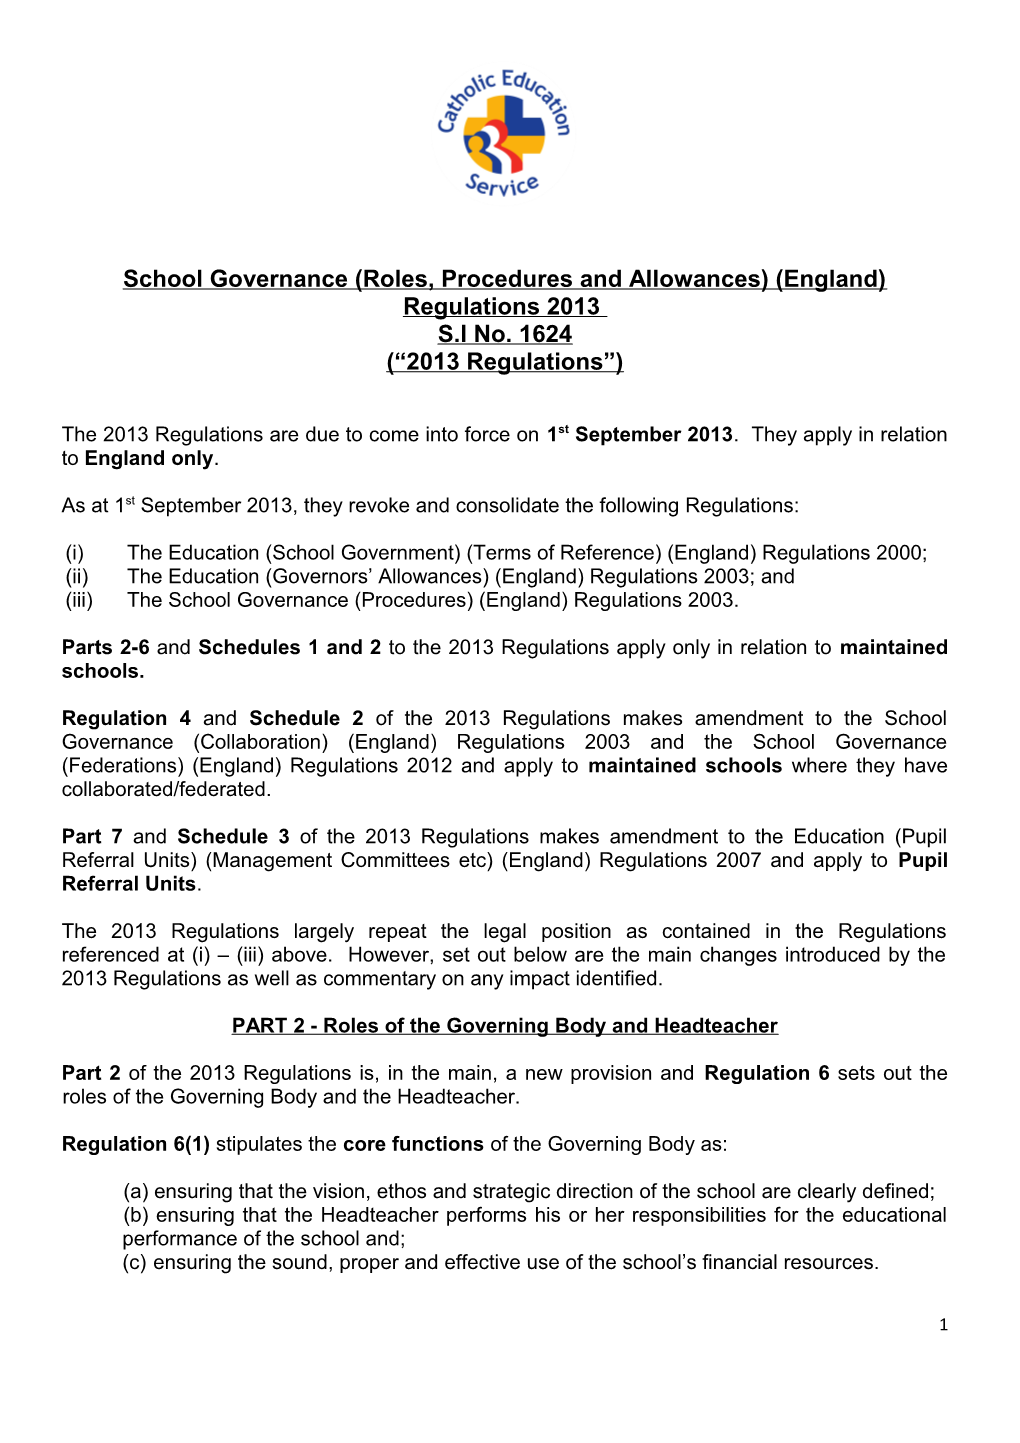 School Governance (Roles, Procedures and Allowances) (England) Regulations 2013